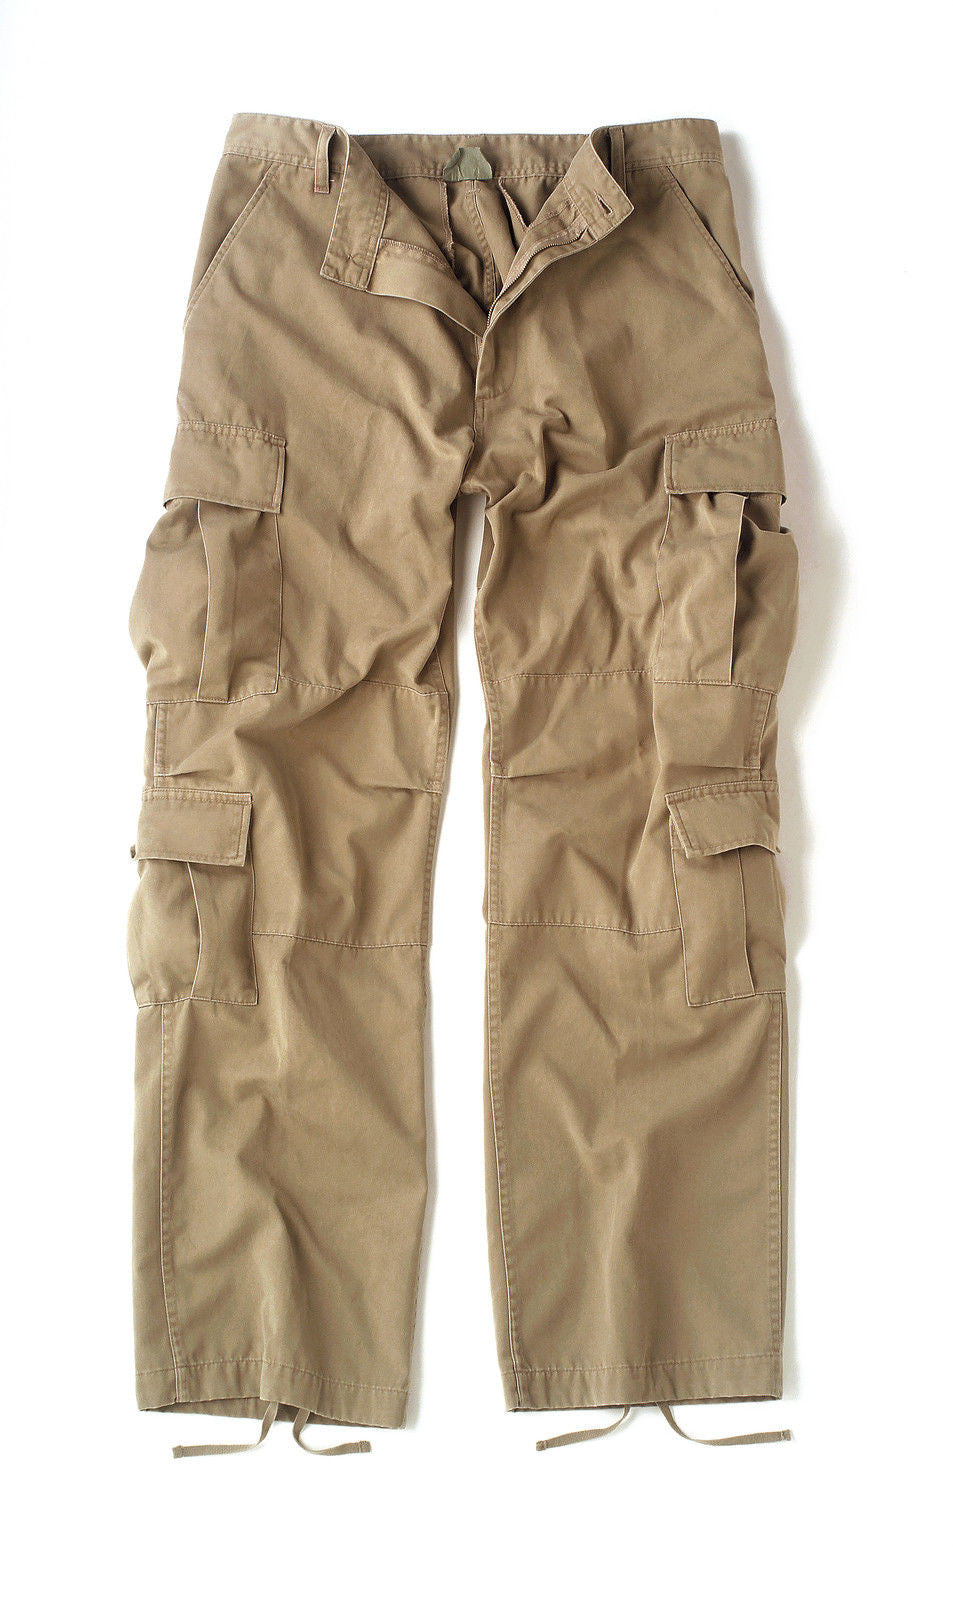 Vintage Khaki Paratrooper Cargo Pants BDU